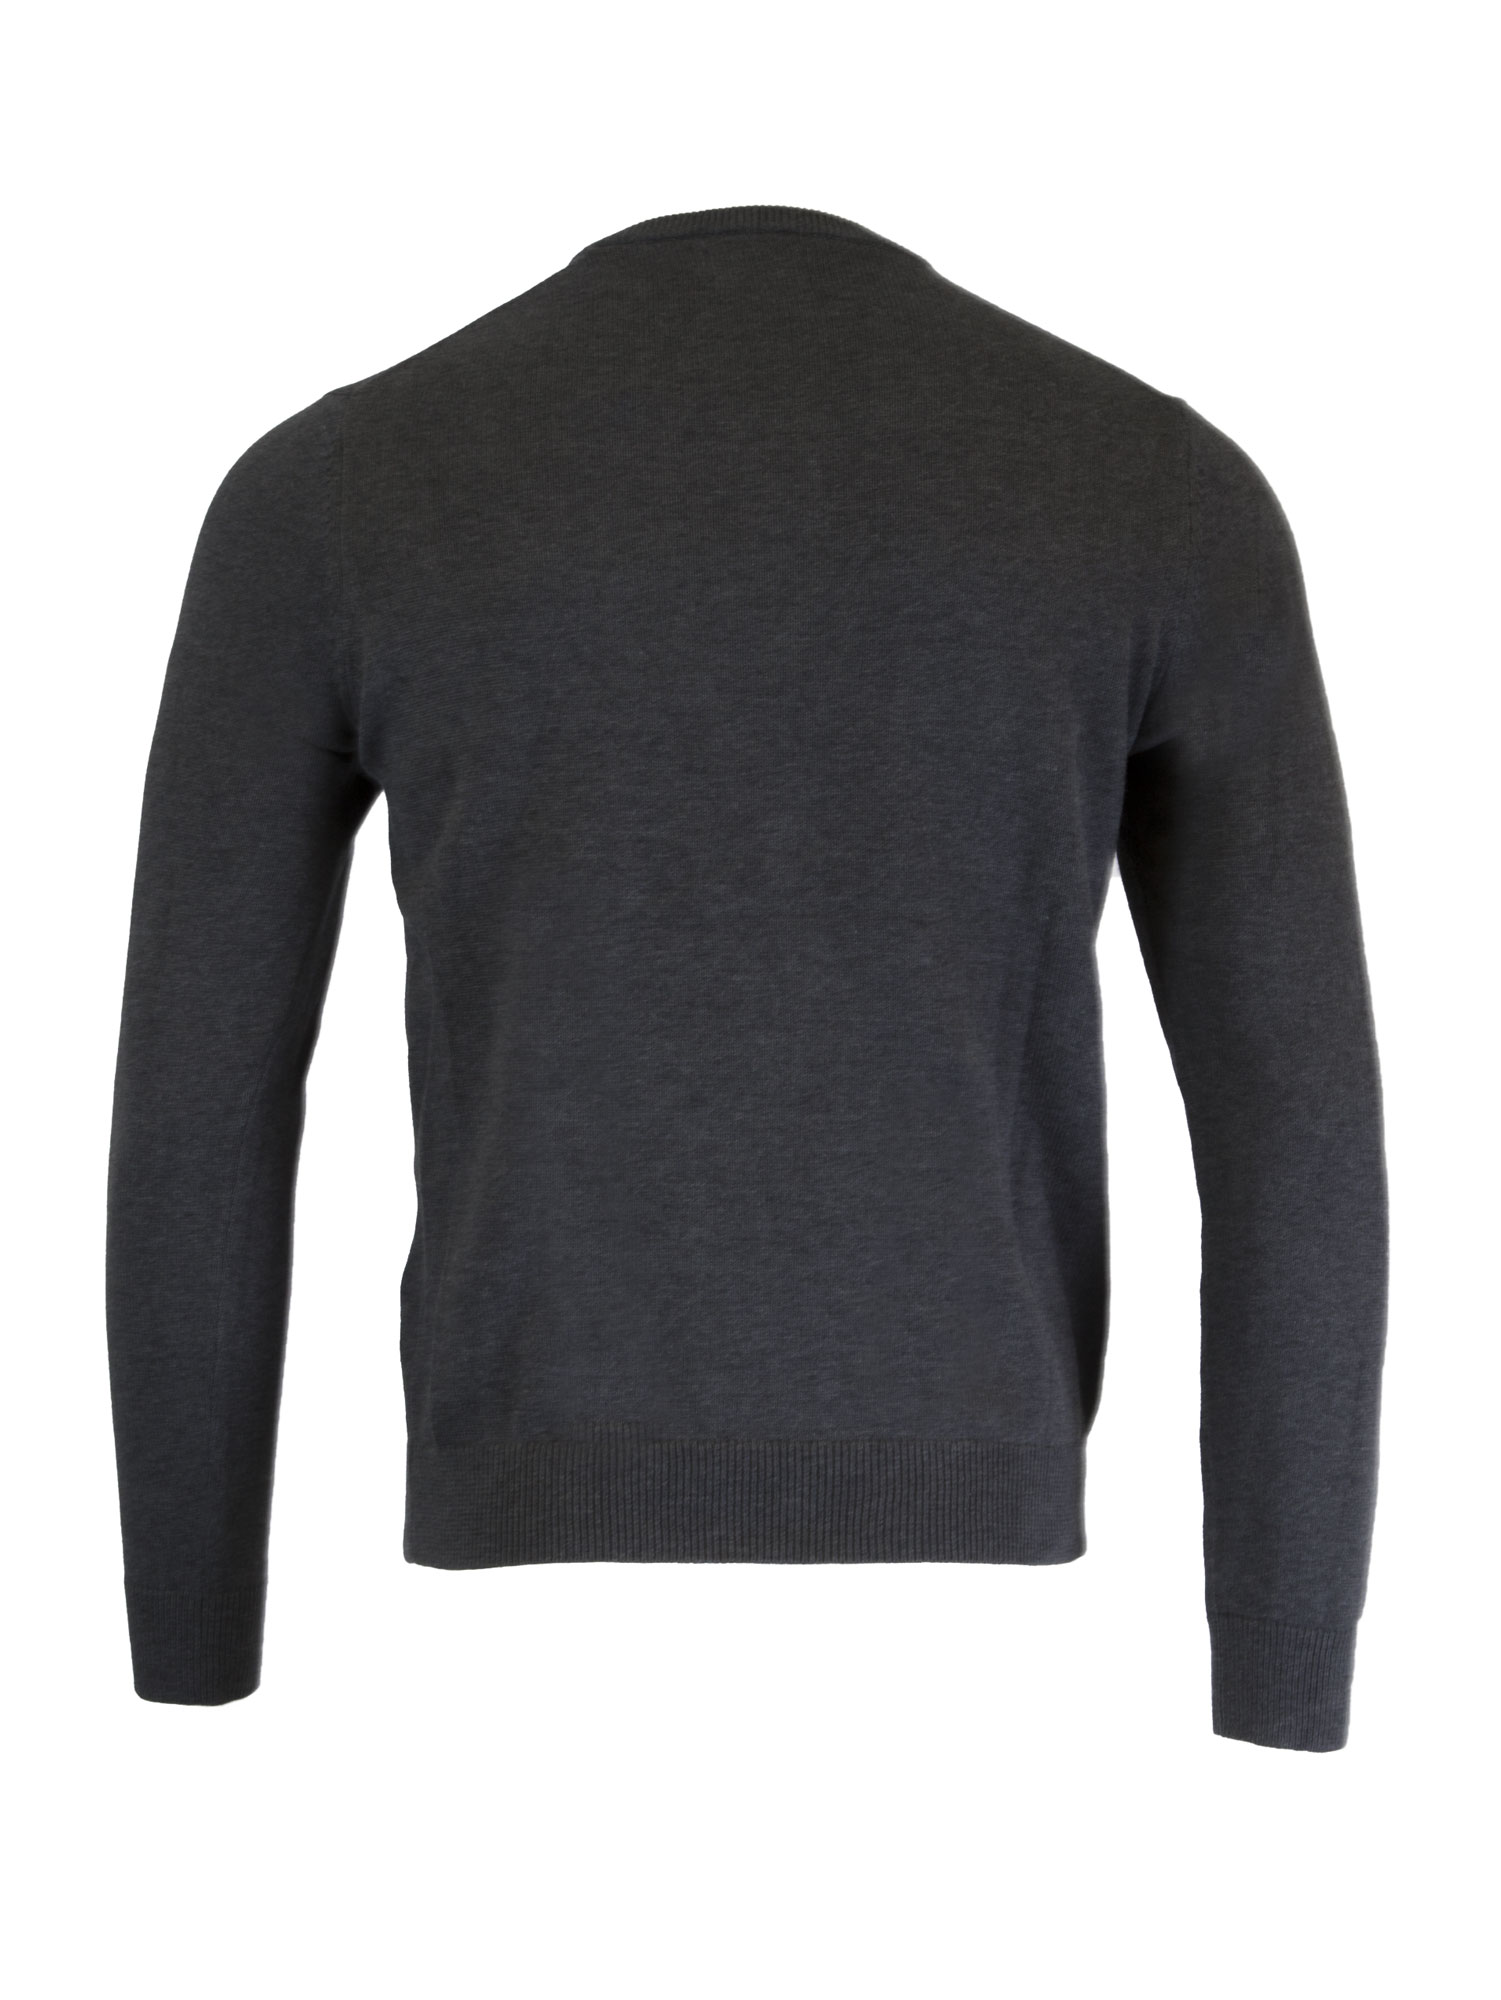 Gant Men's Contrast Cotton Crew Neck Sweater | eBay